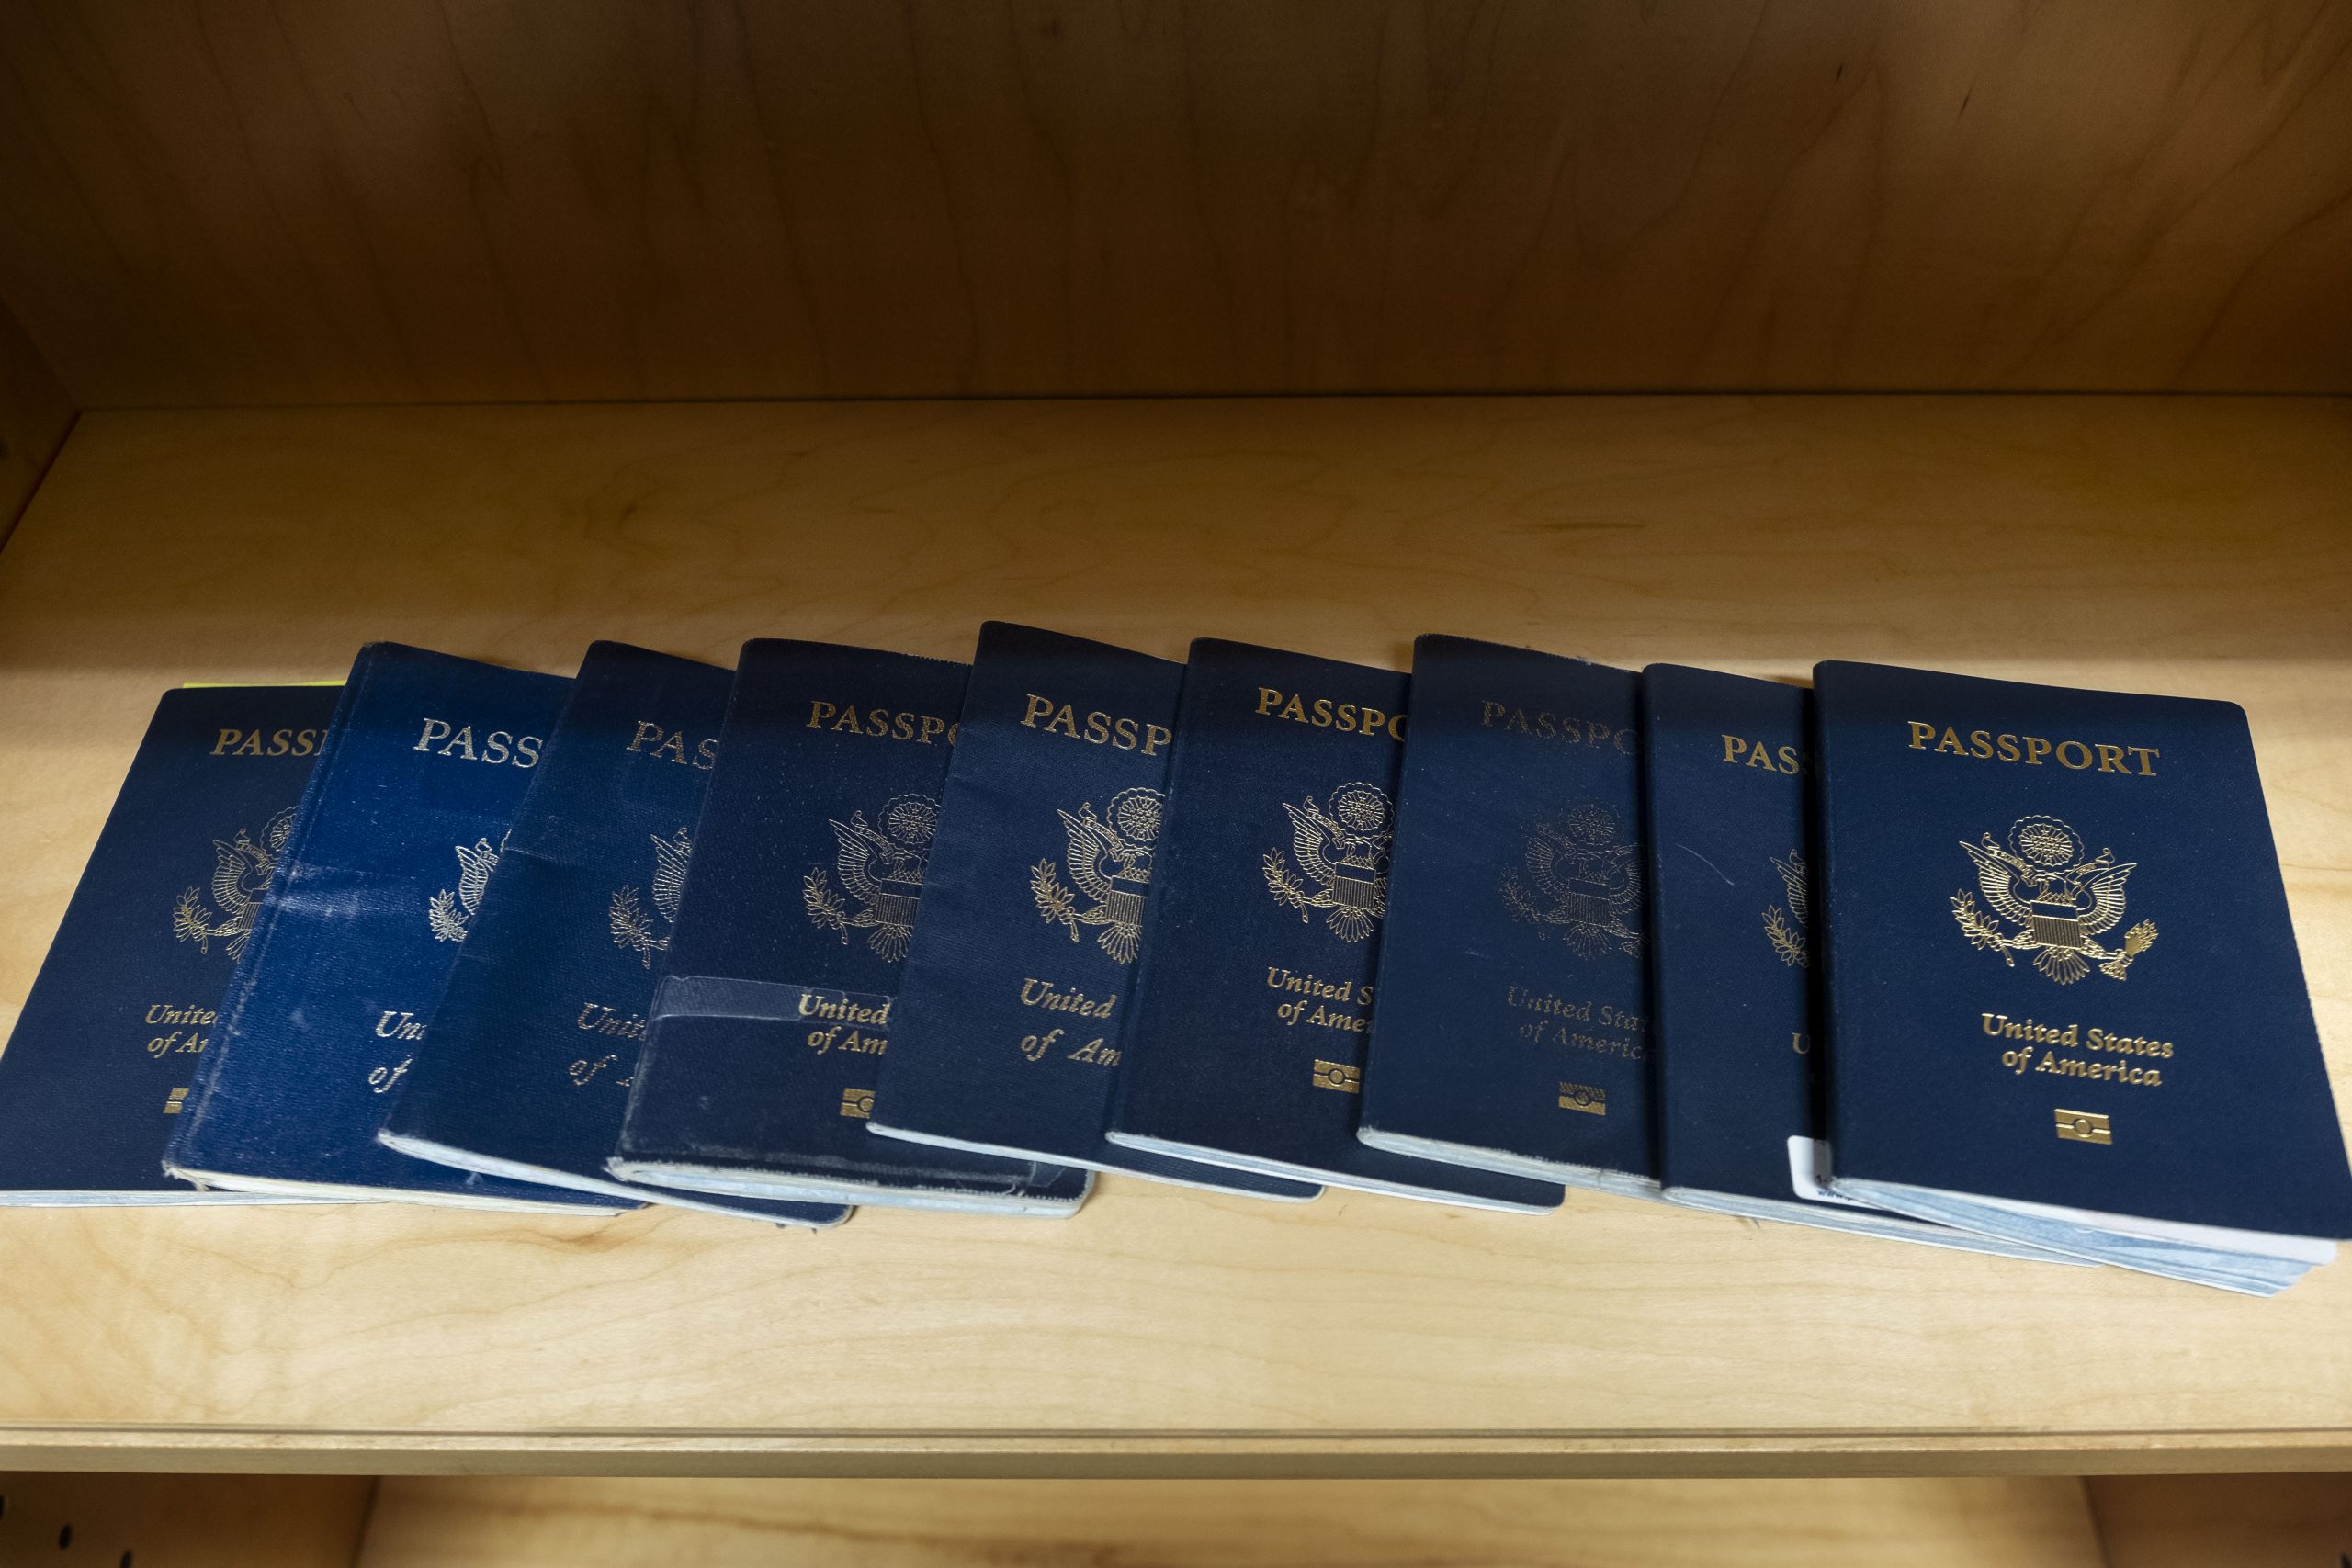 passports lined up on a shelf.